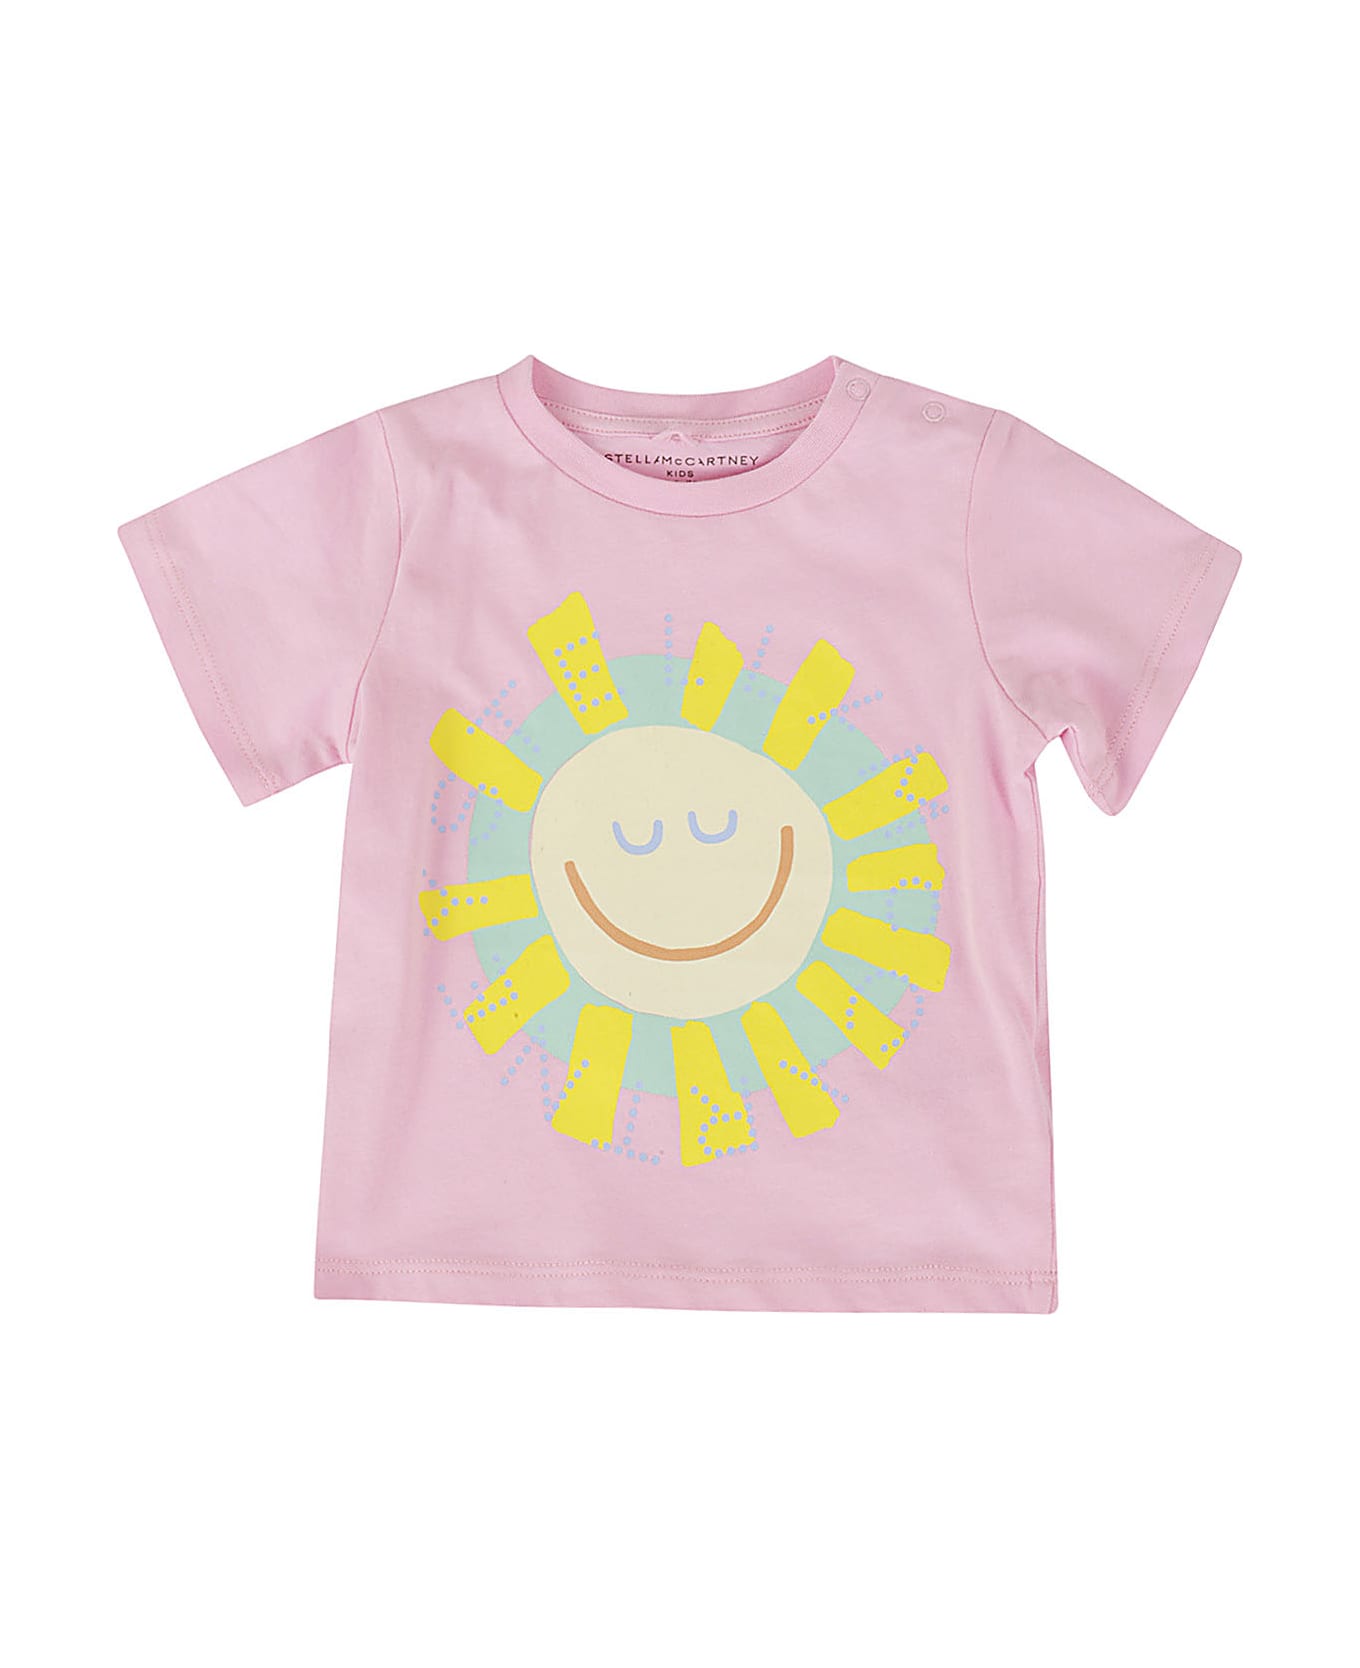 Stella McCartney Kids T Shirt - G Rosa